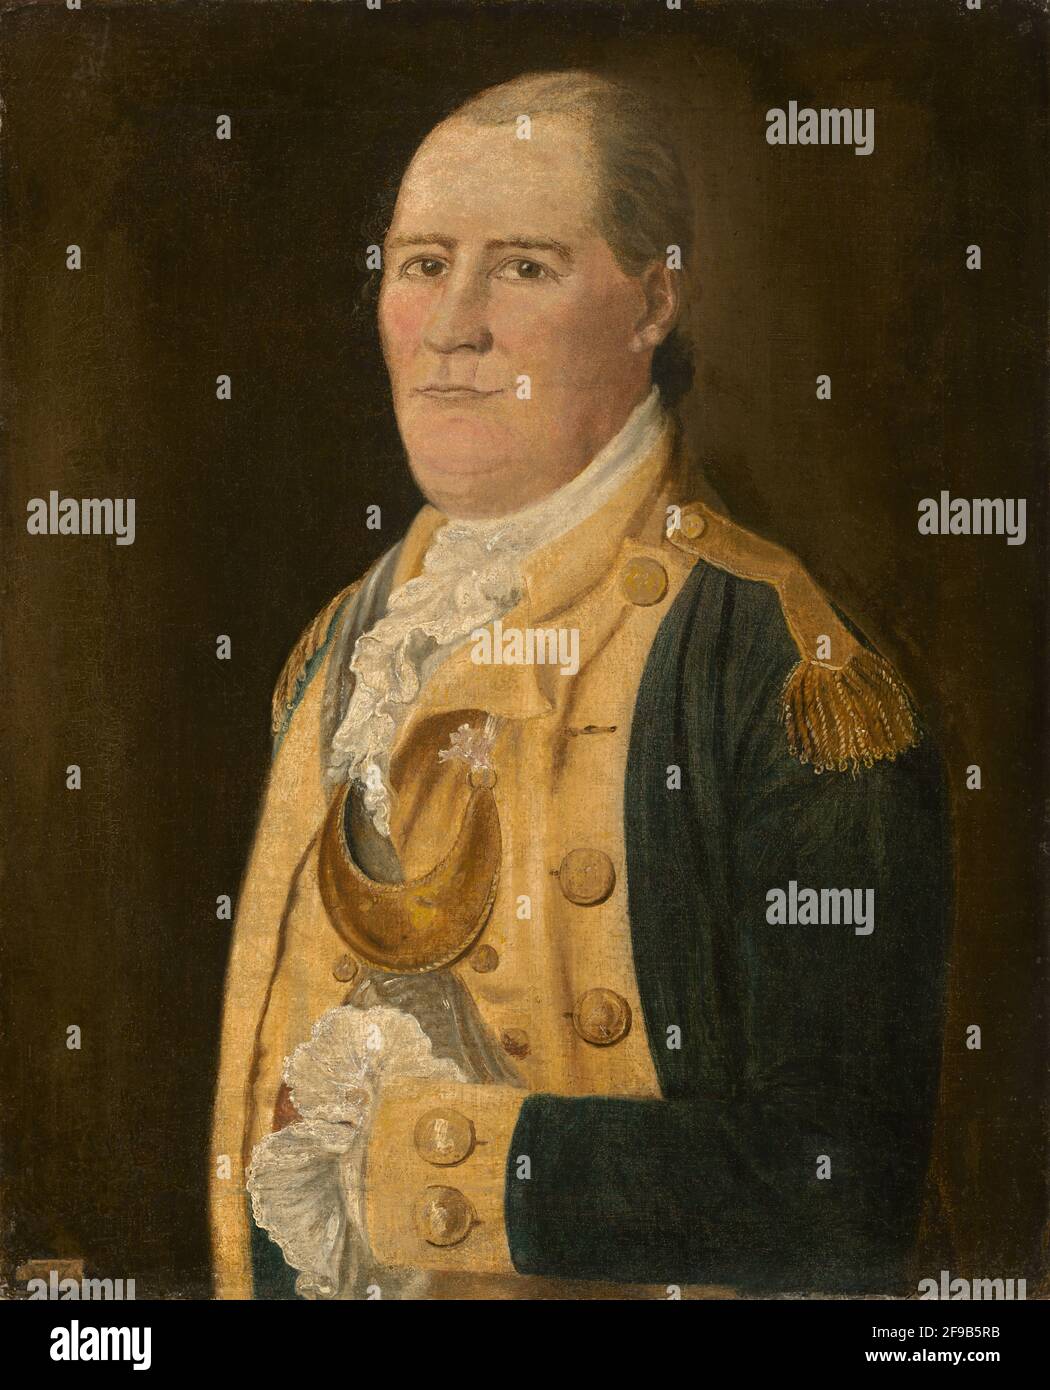 Daniel Morgan, c. 1780. Stock Photo